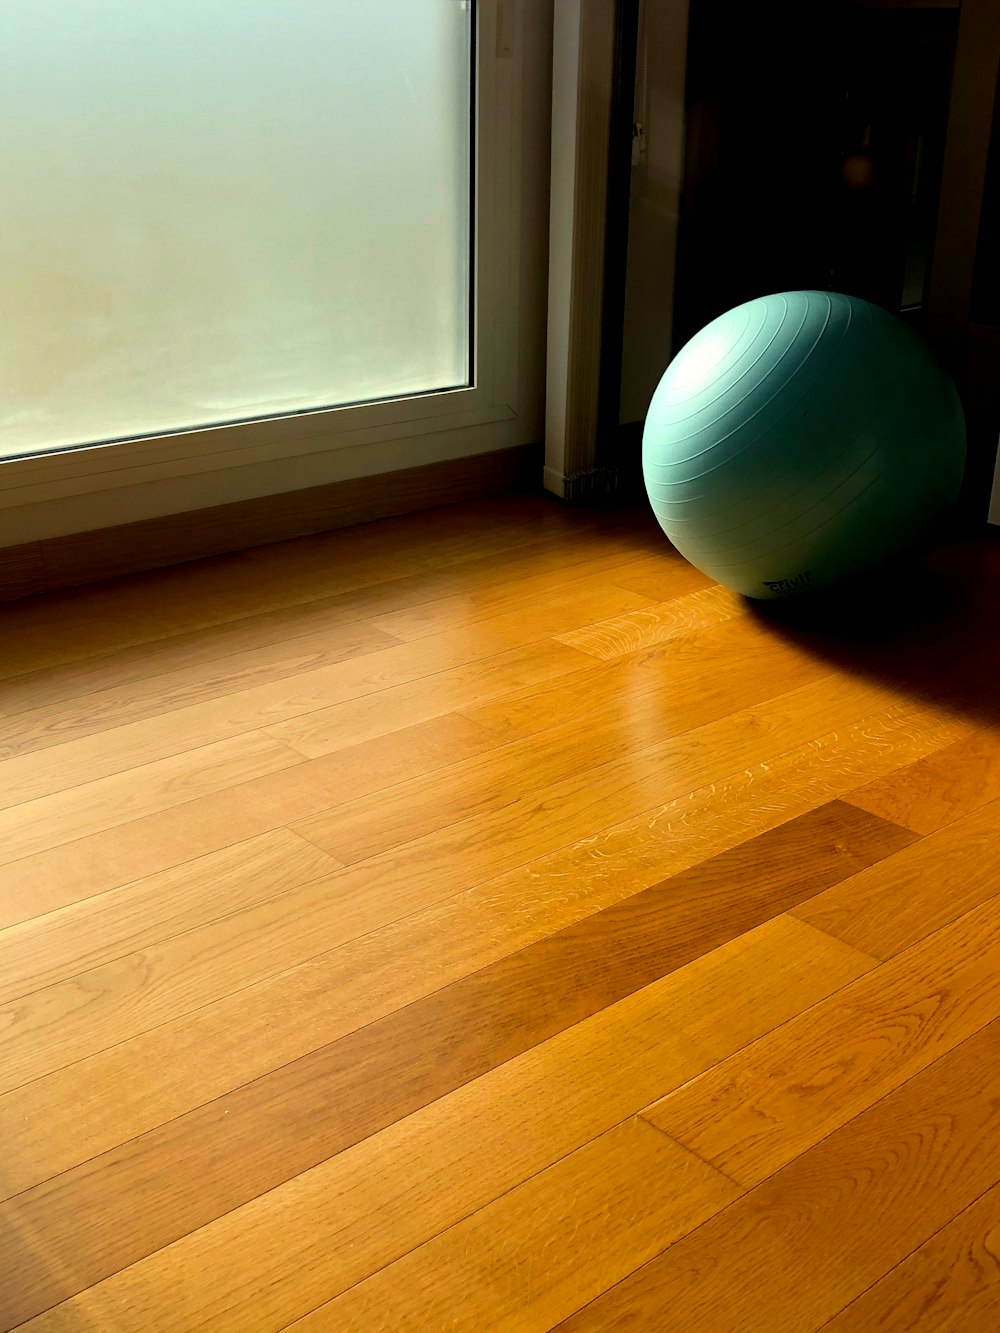 green fitness ball on parquet floor